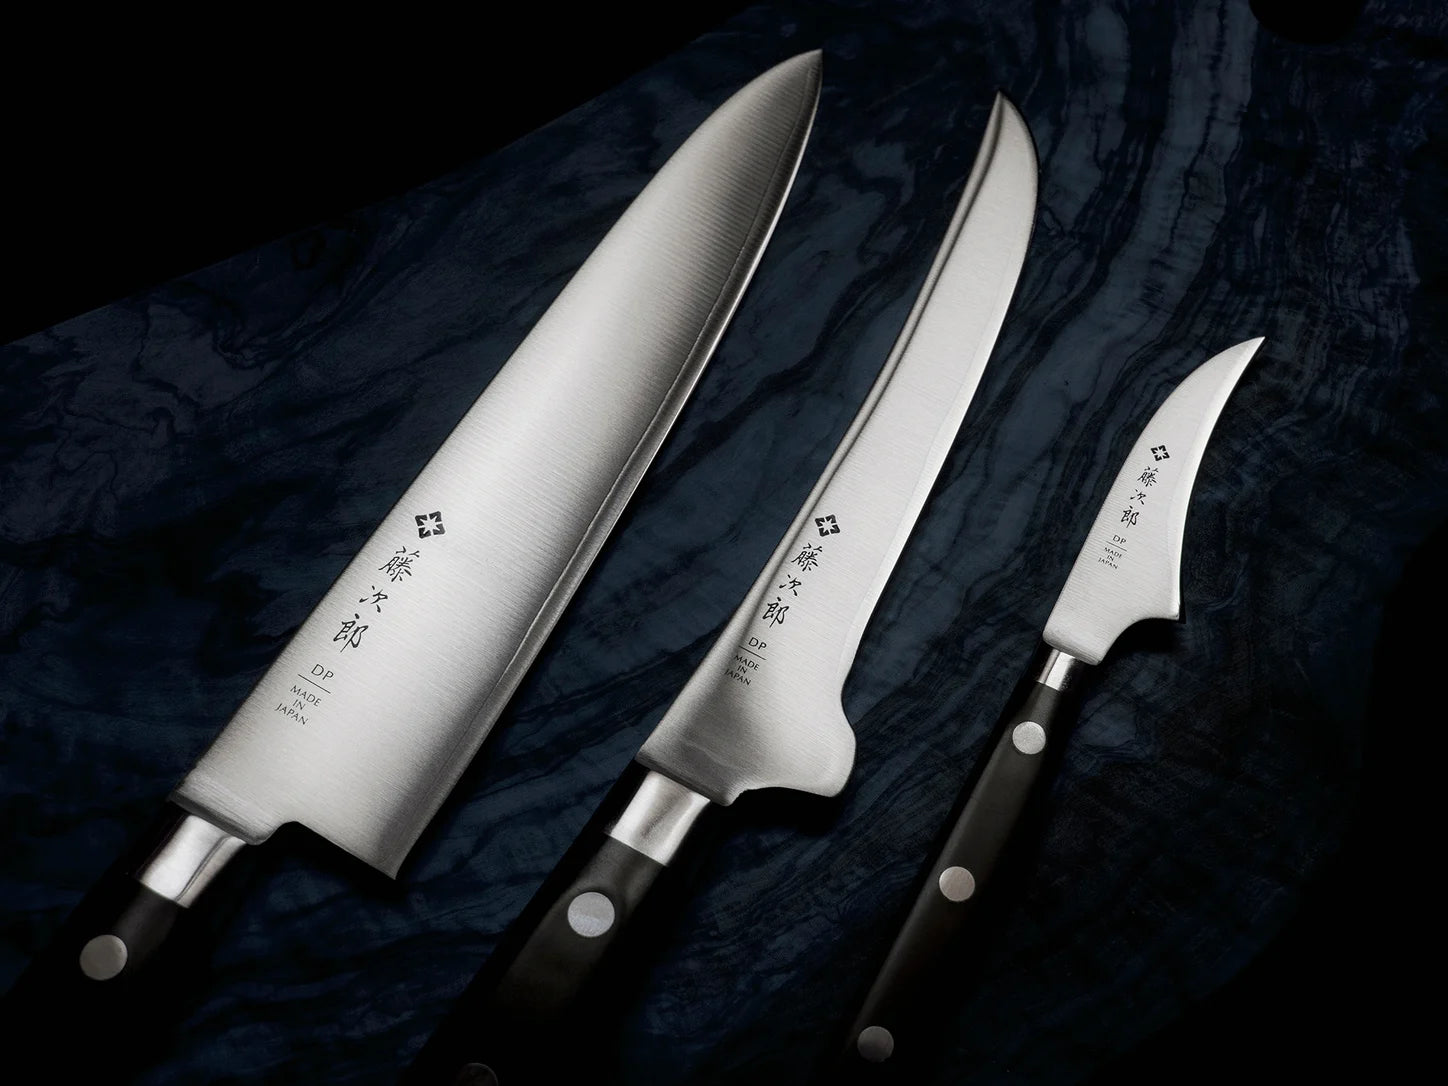 Premium Japanese knives